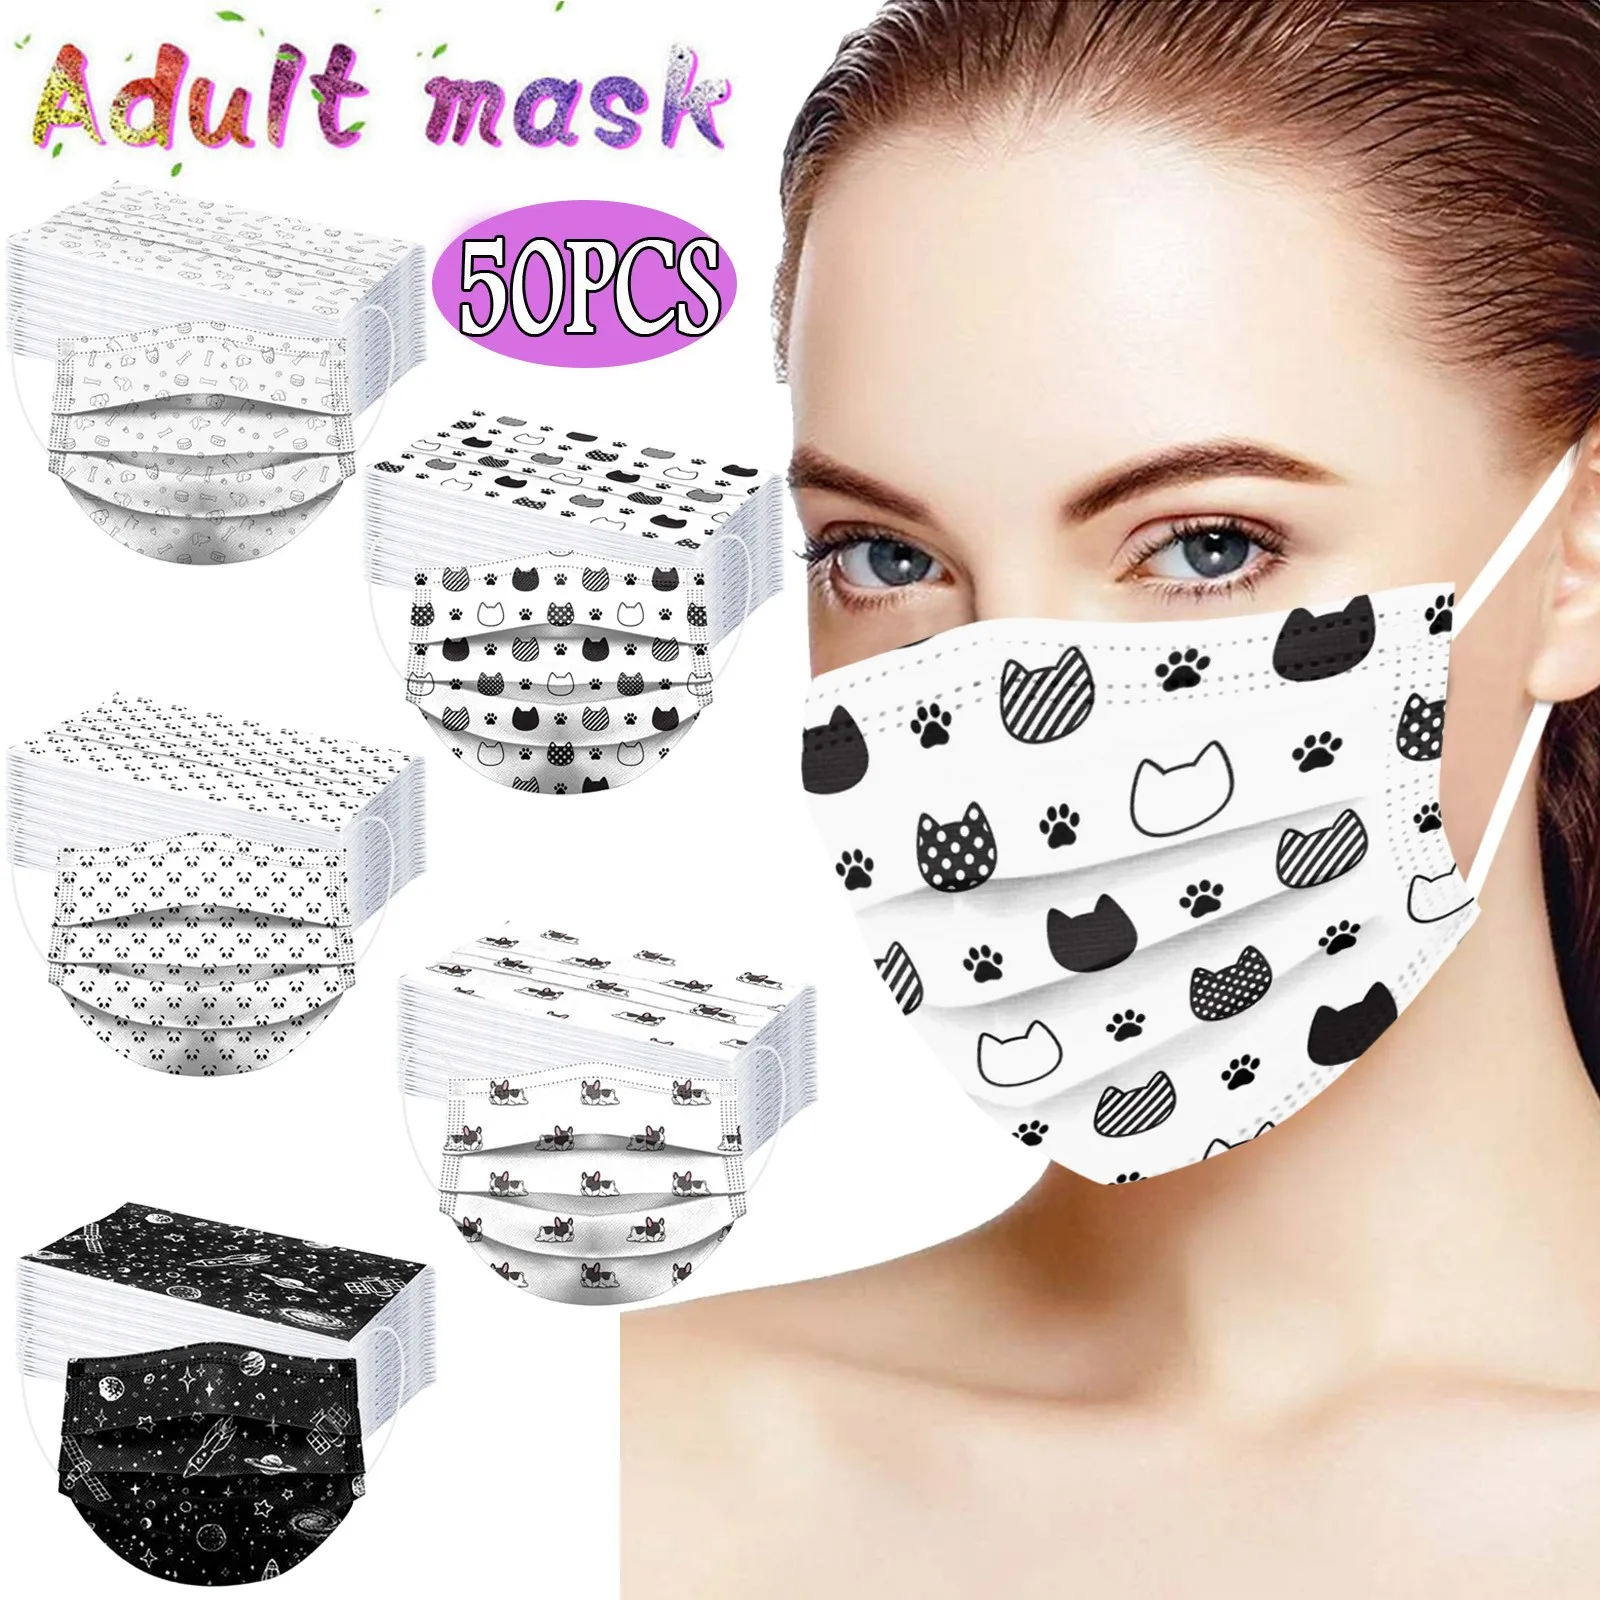 

50pcs Adults Cartoon Animal Print Disposable Face Mask 3 Ply Earloop Masks Mascarillas Halloween Cosplay Mondmaskers Masque Mask